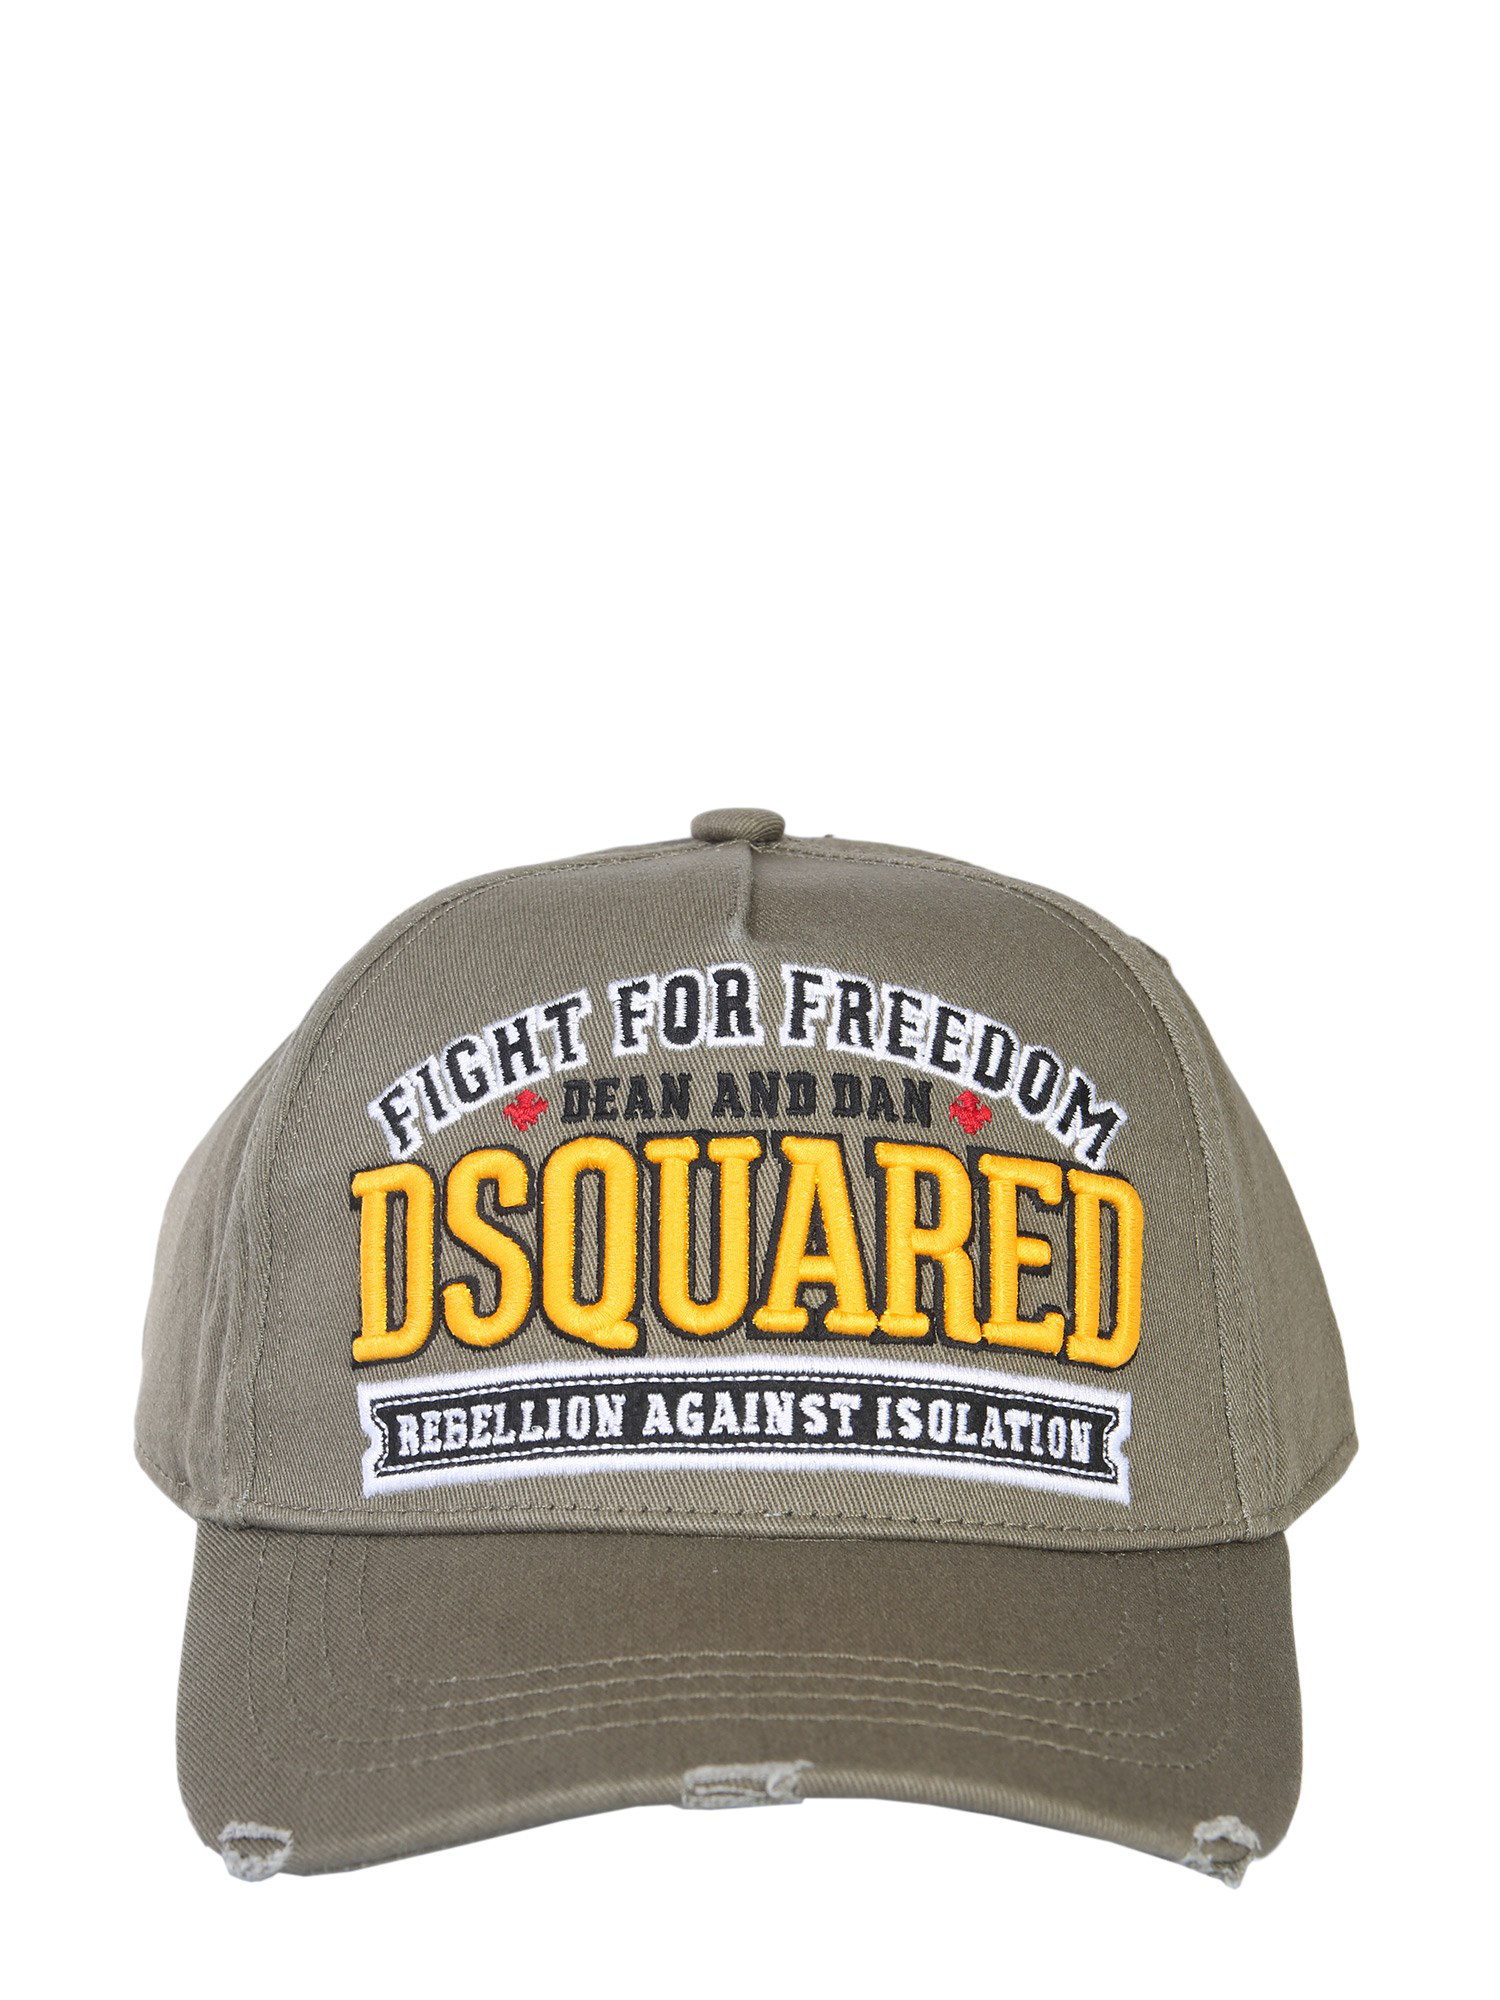 dsquared rebellion cap